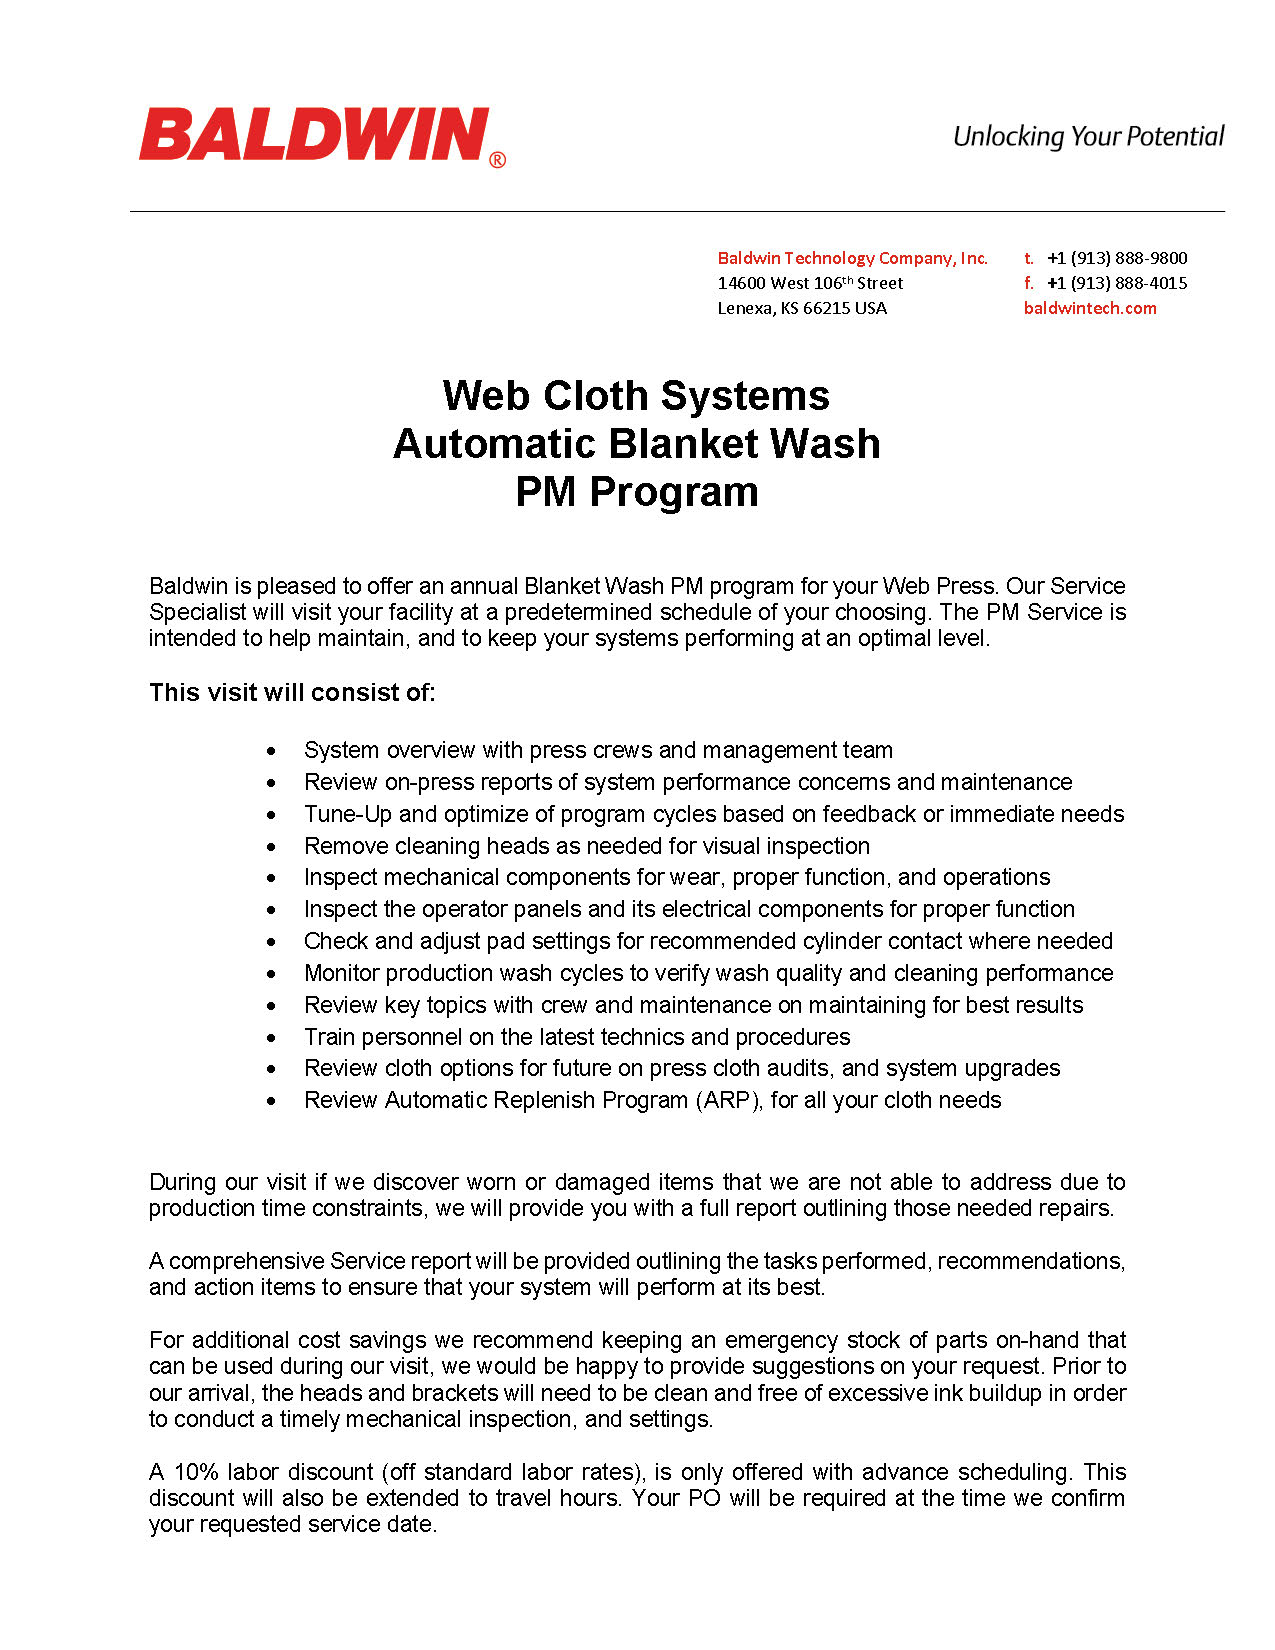 Blanket Wash Web Cloth ABC PM PDF_Page_1.jpg